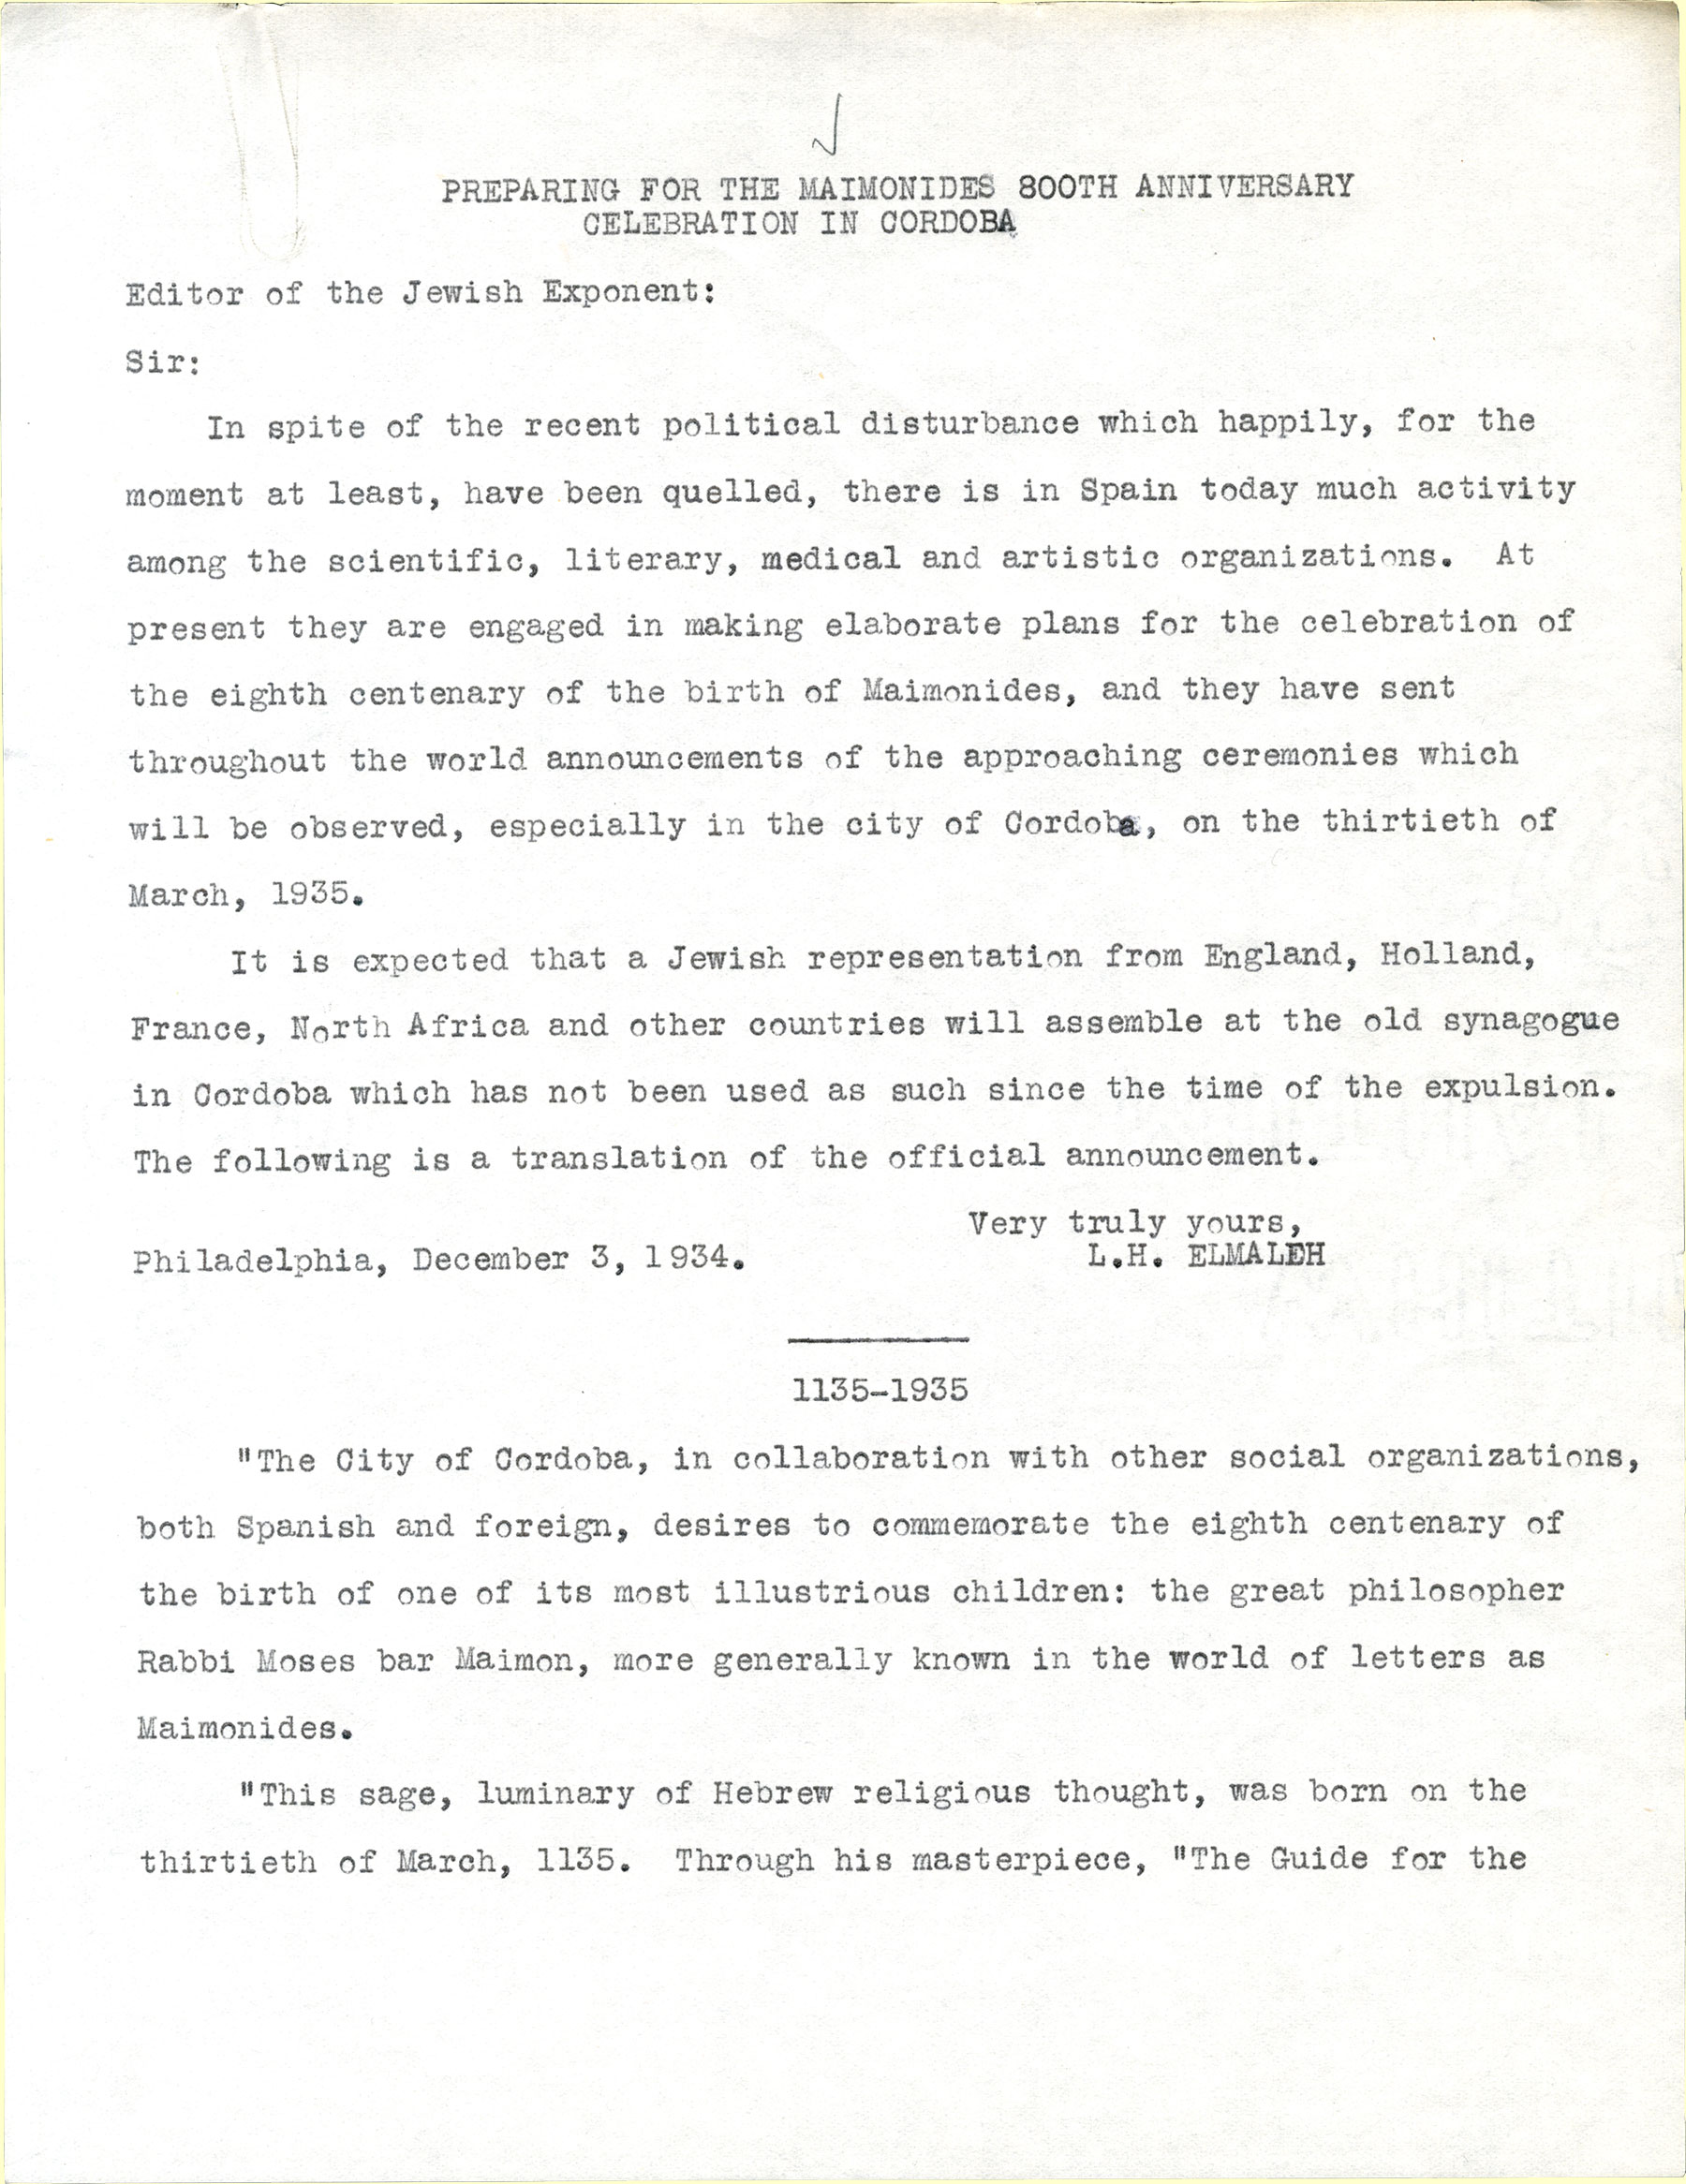 Elmaleh to Adler: copy of letter to Philadelphia Jewish Exponent with translation of Cordoba manifesto, page 1